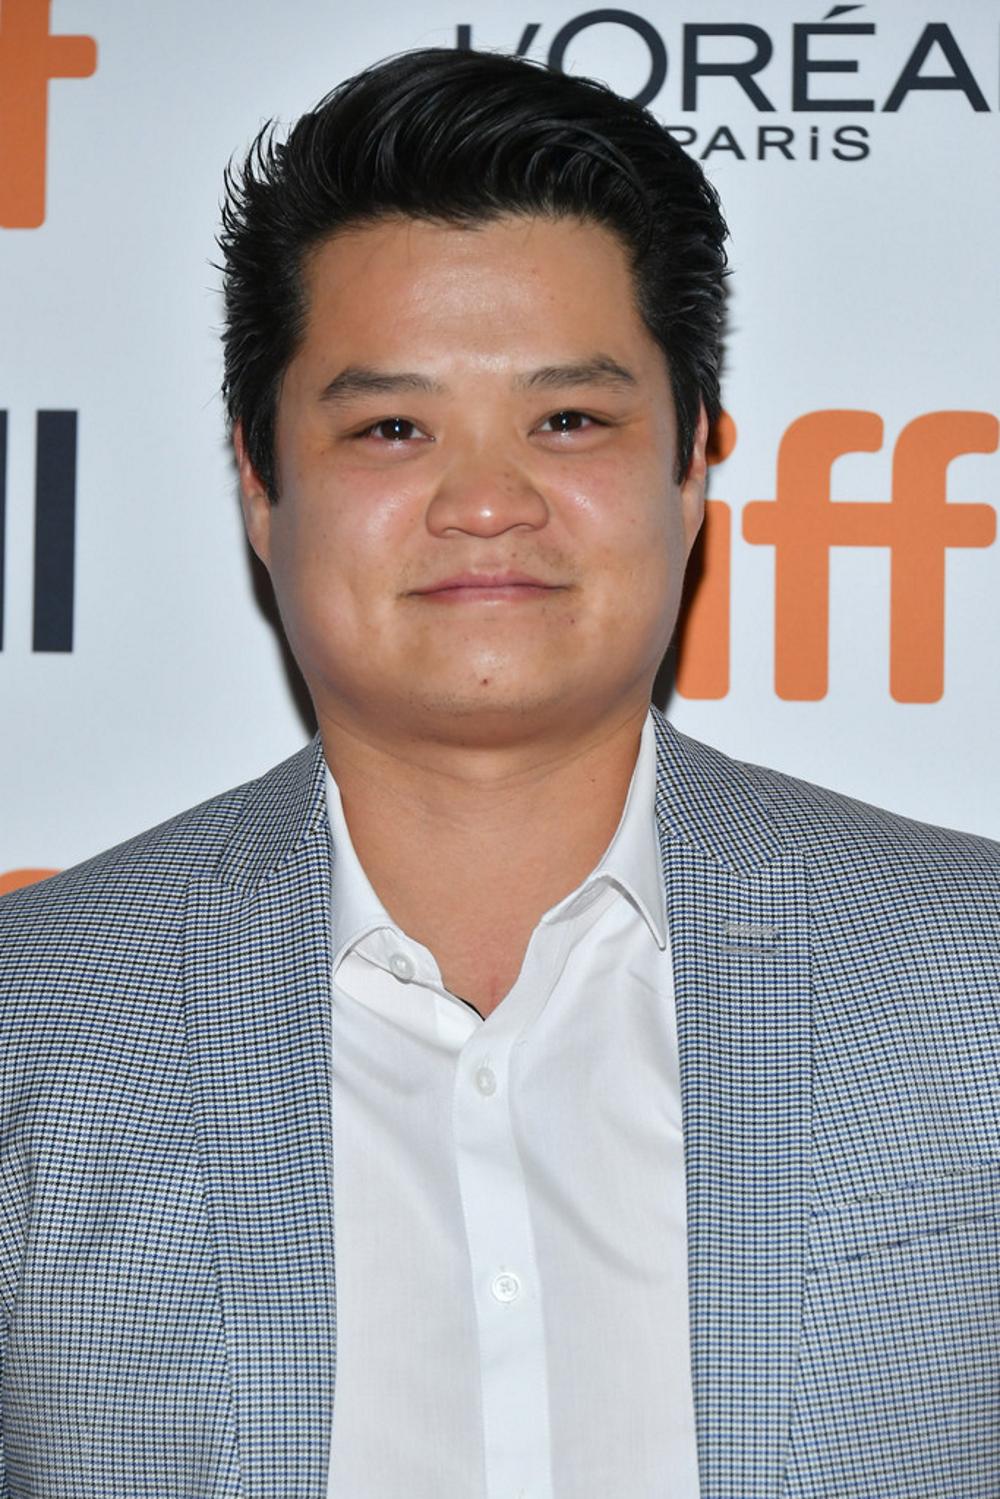 Jason Chen at the TIFF premiere of Jojo Rabbit, 2019 [Photo: Getty Images]